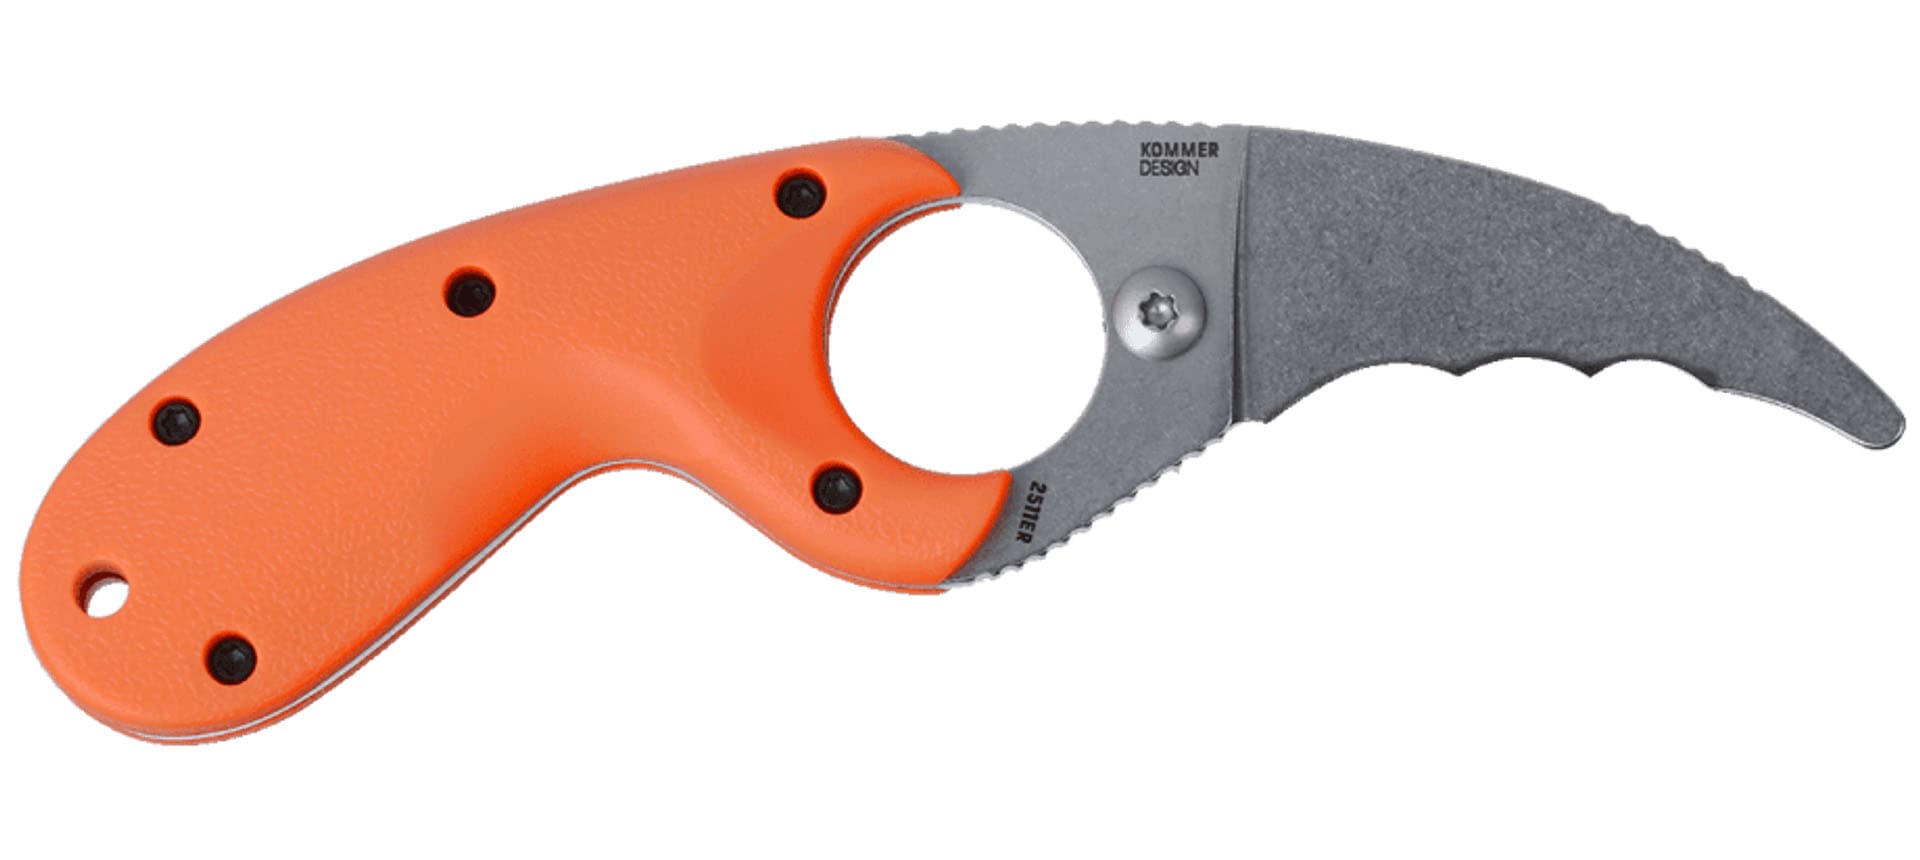 CRKT® Bear Claw™ Fixed Blade Knife